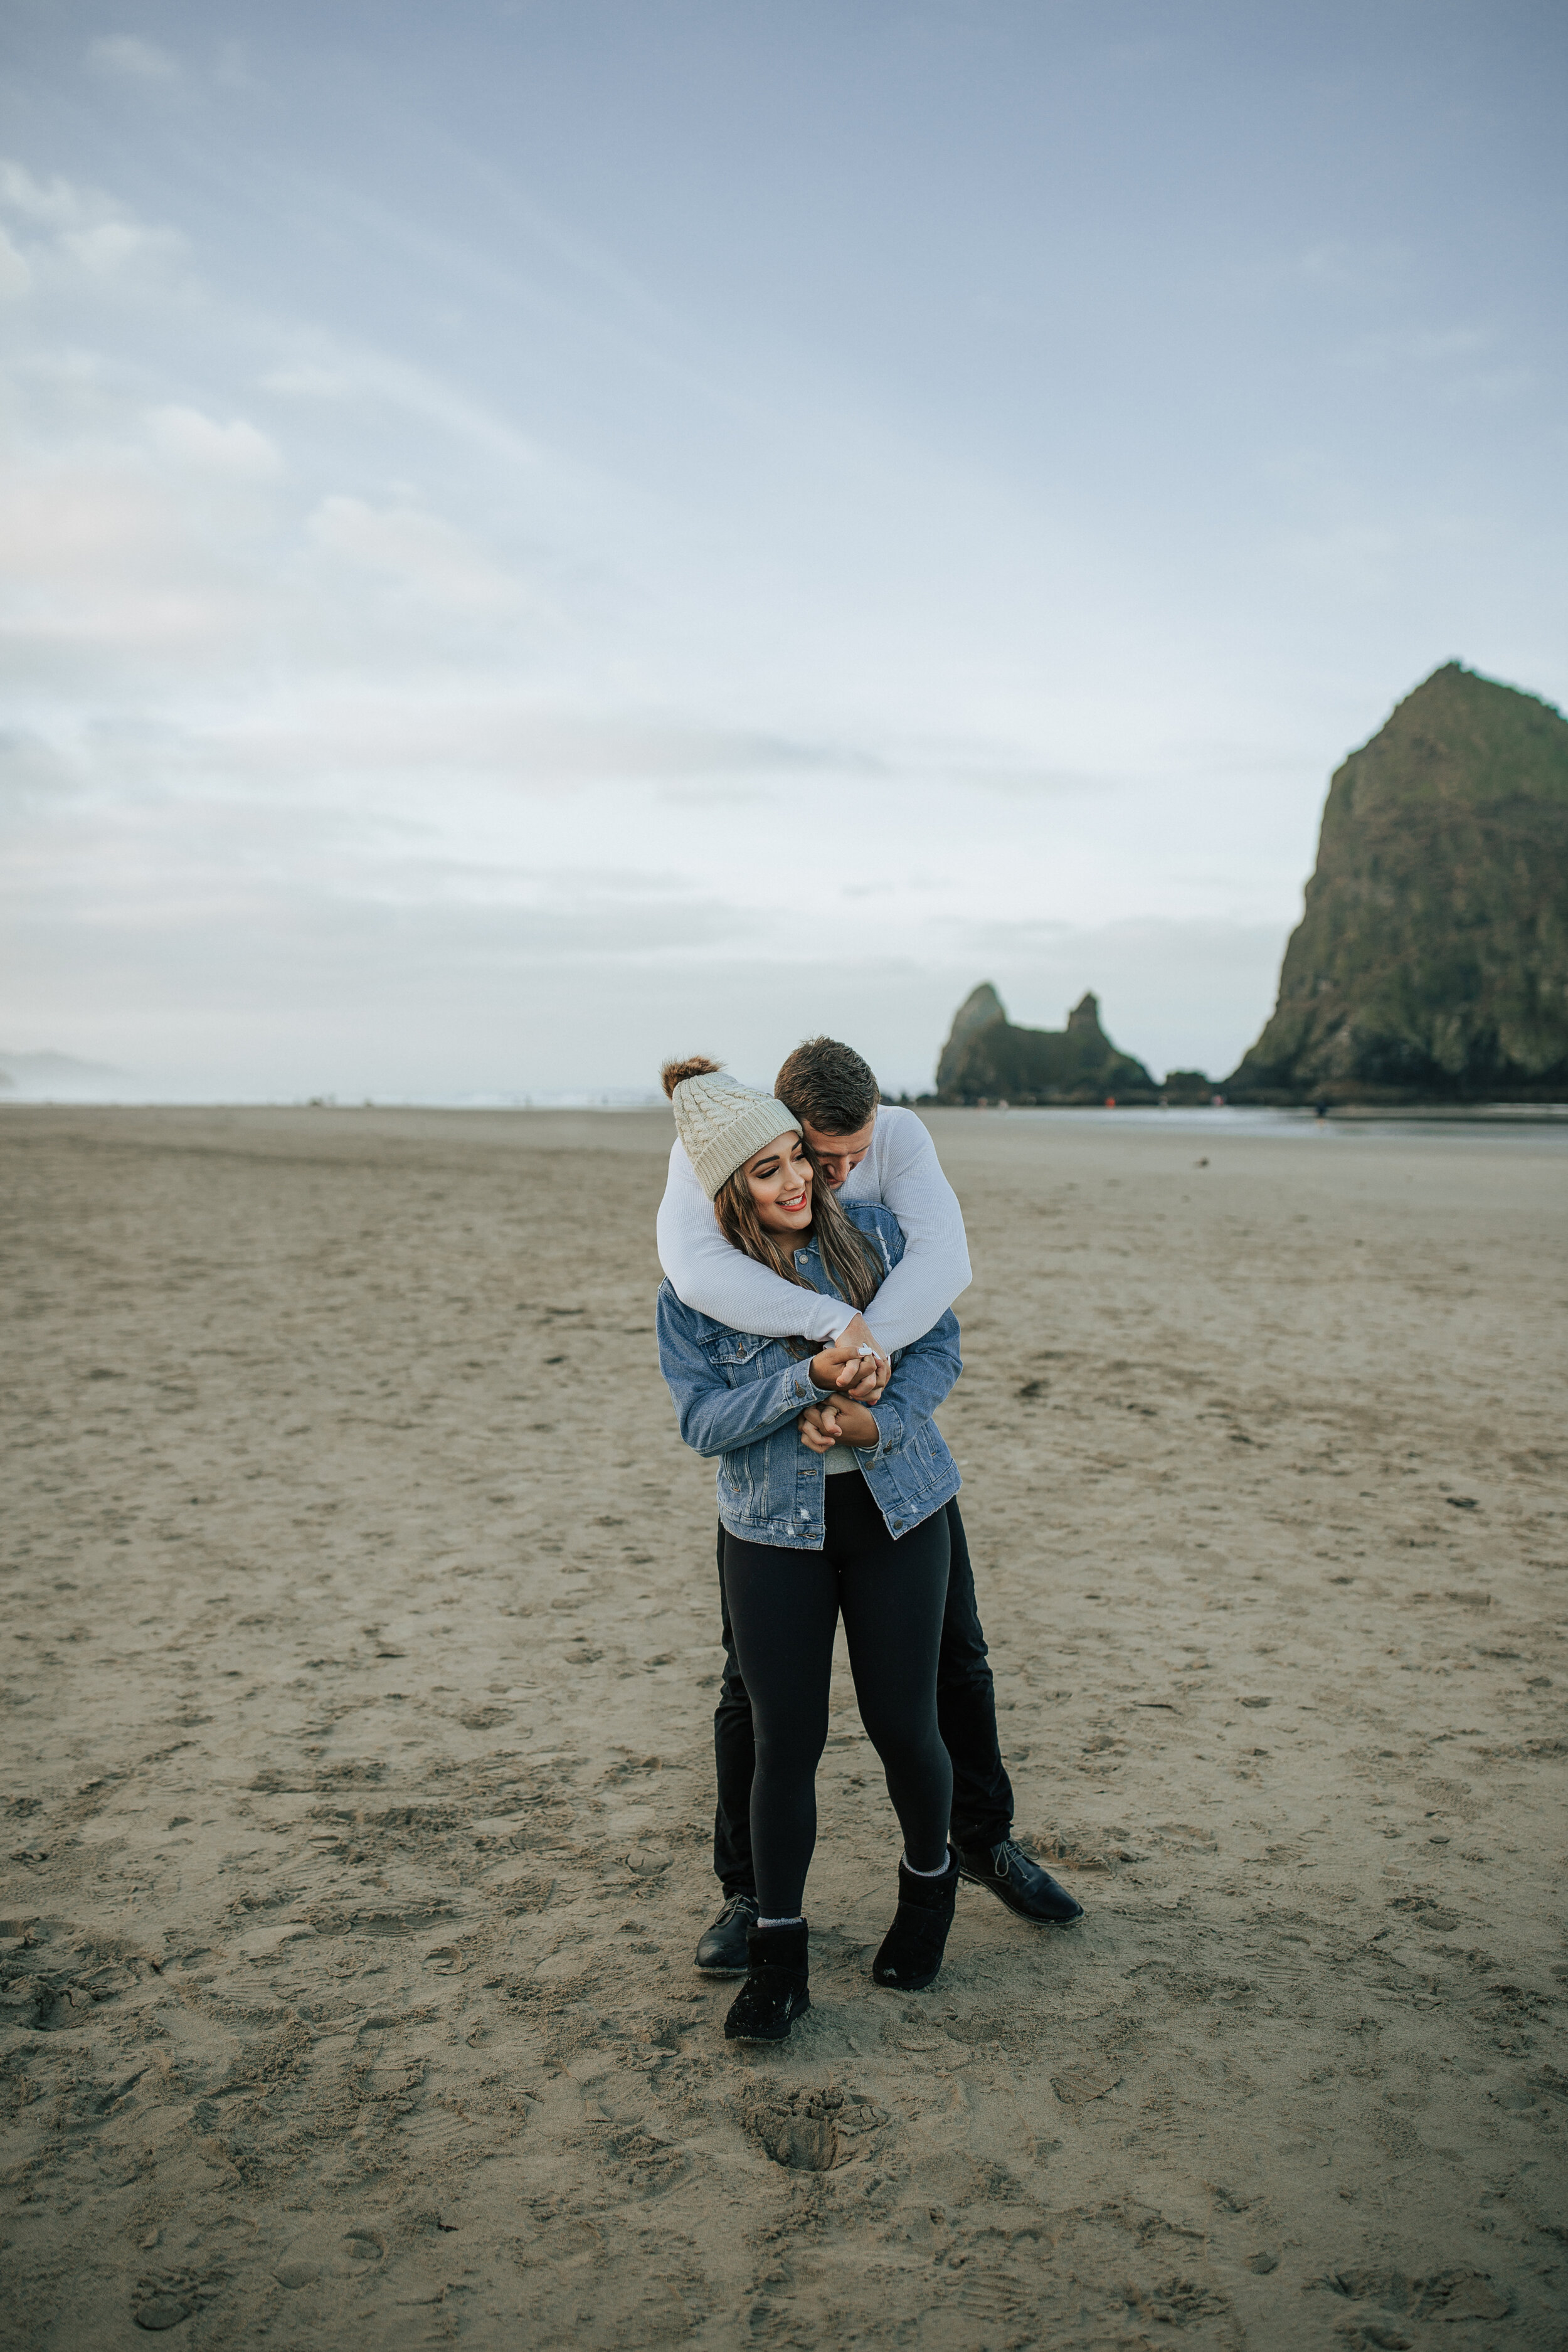 Cannon Beach Oregon coast engagement shoot Oregon elopement photographer Oregon wedding photographer beach couples shoot #oregonphotographer #engagements #coupleshoot